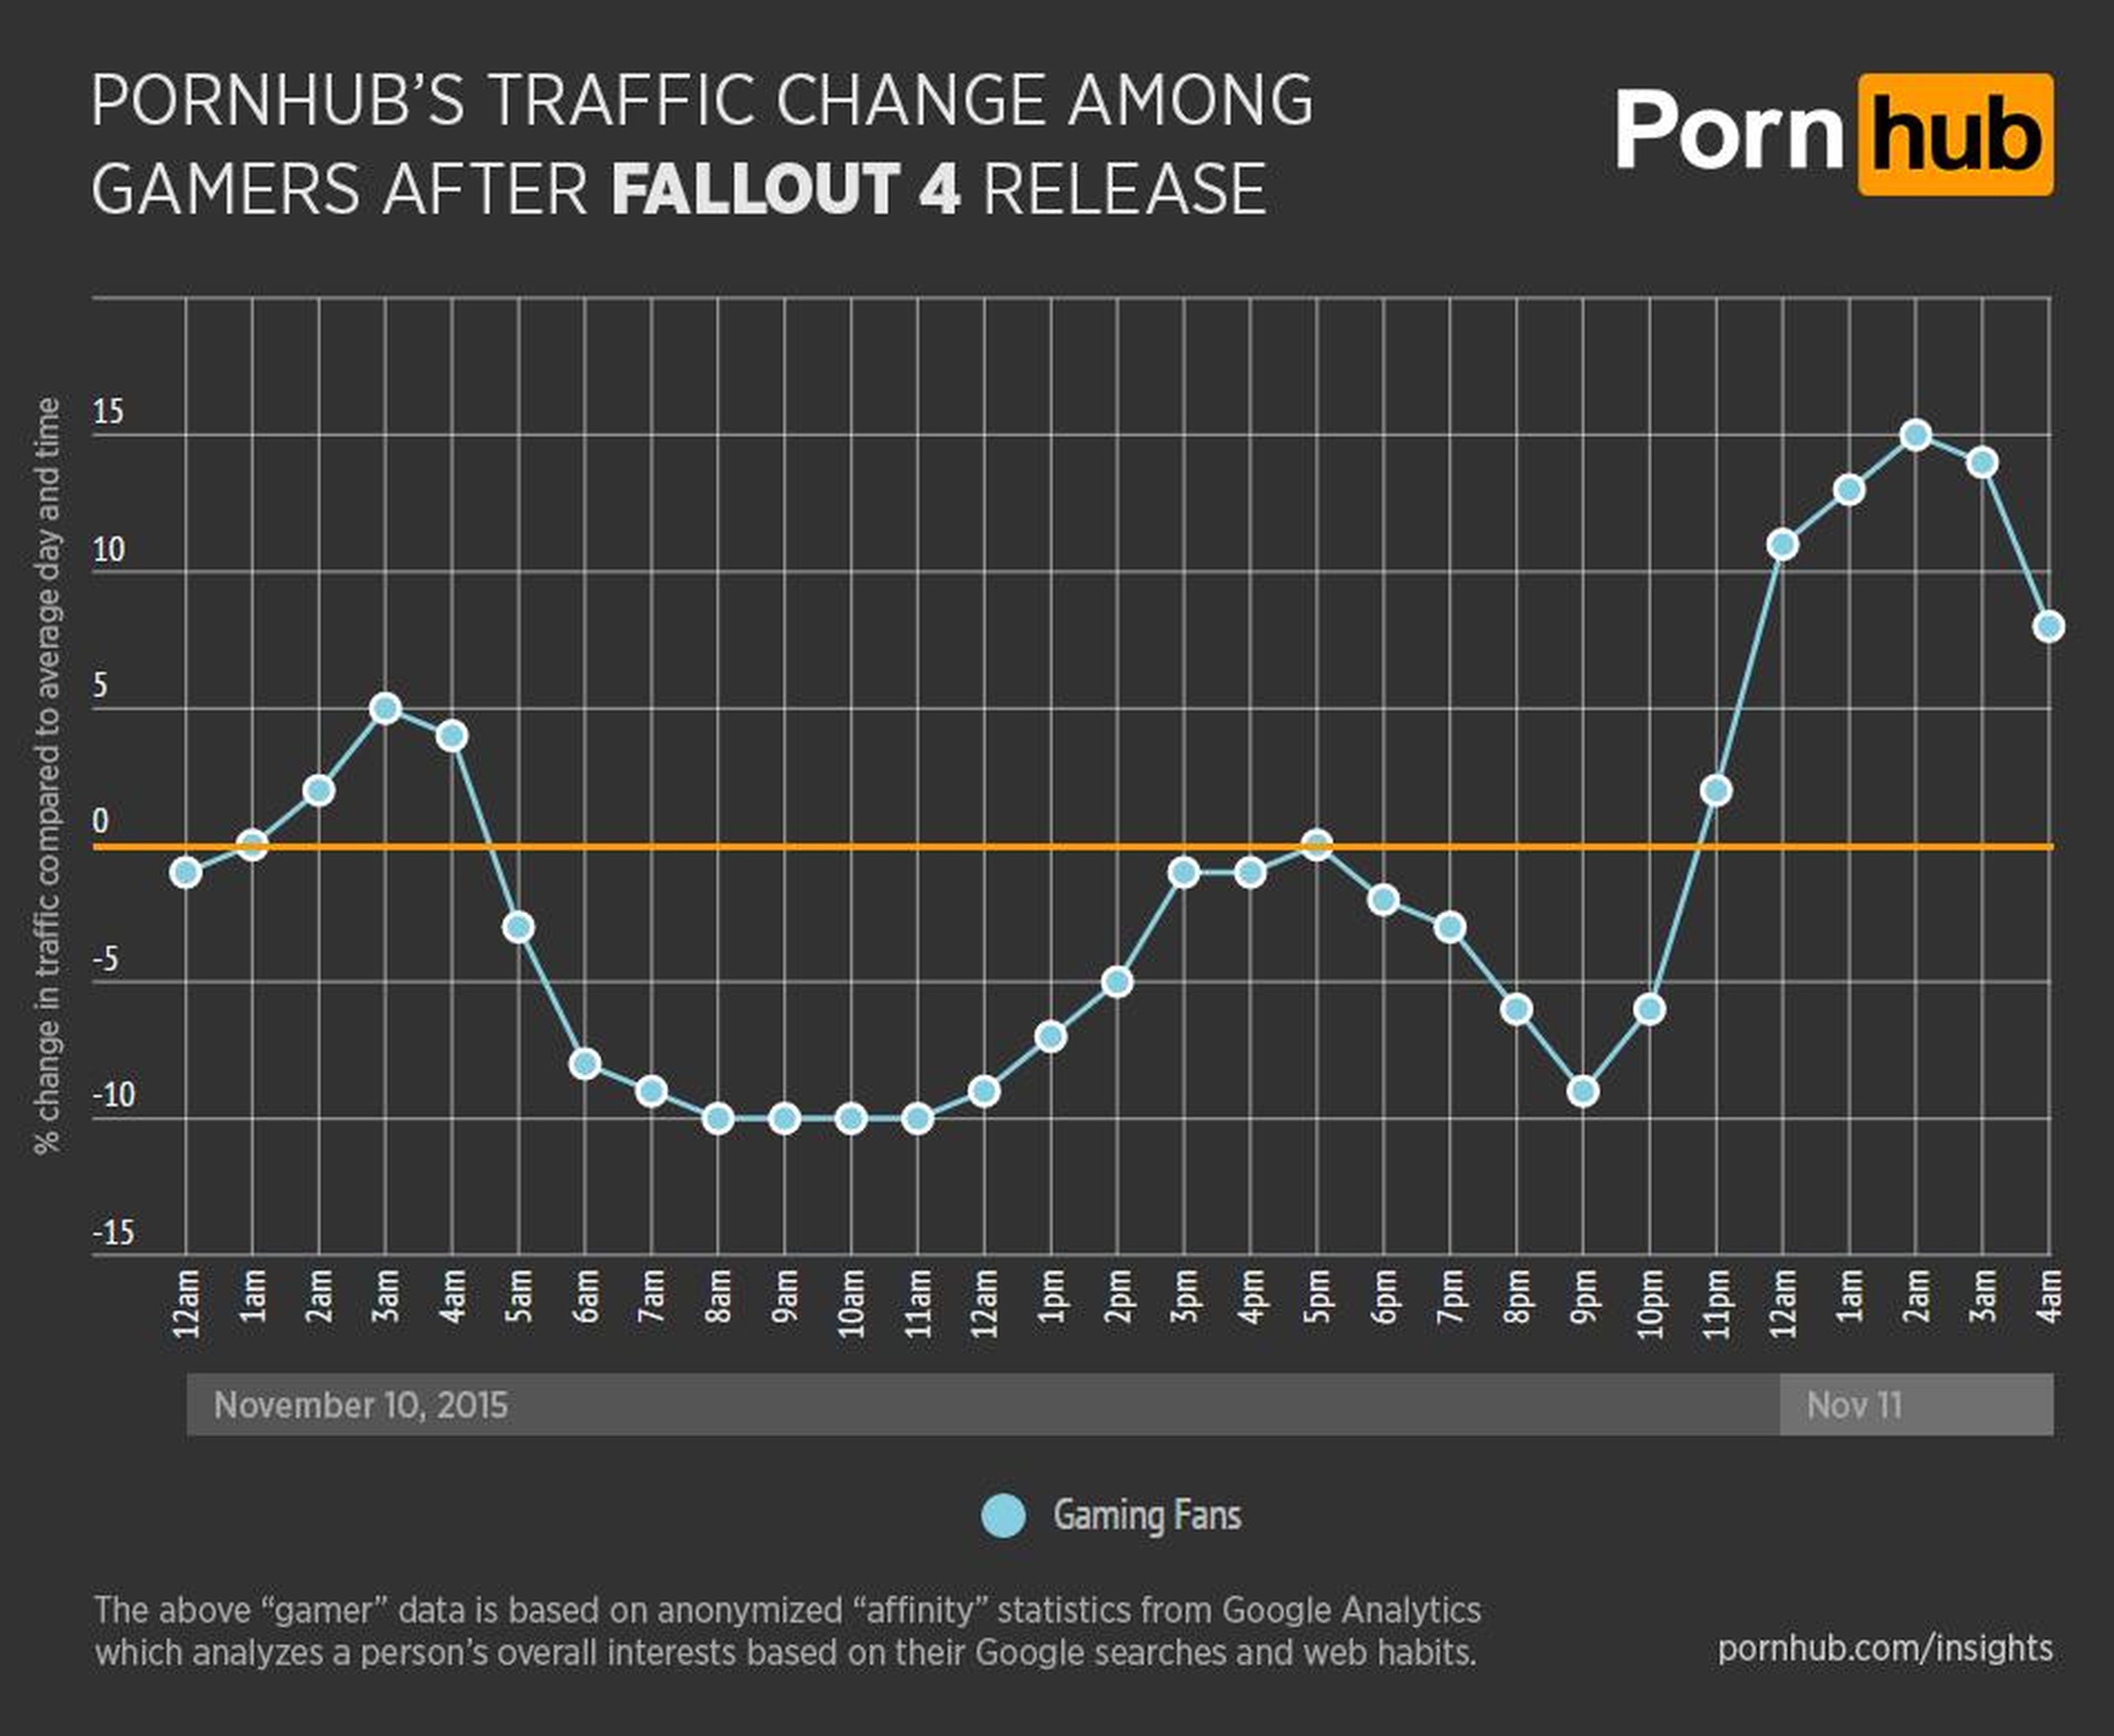 Fallout 4 consigue reducir el tráfico de Pornhub